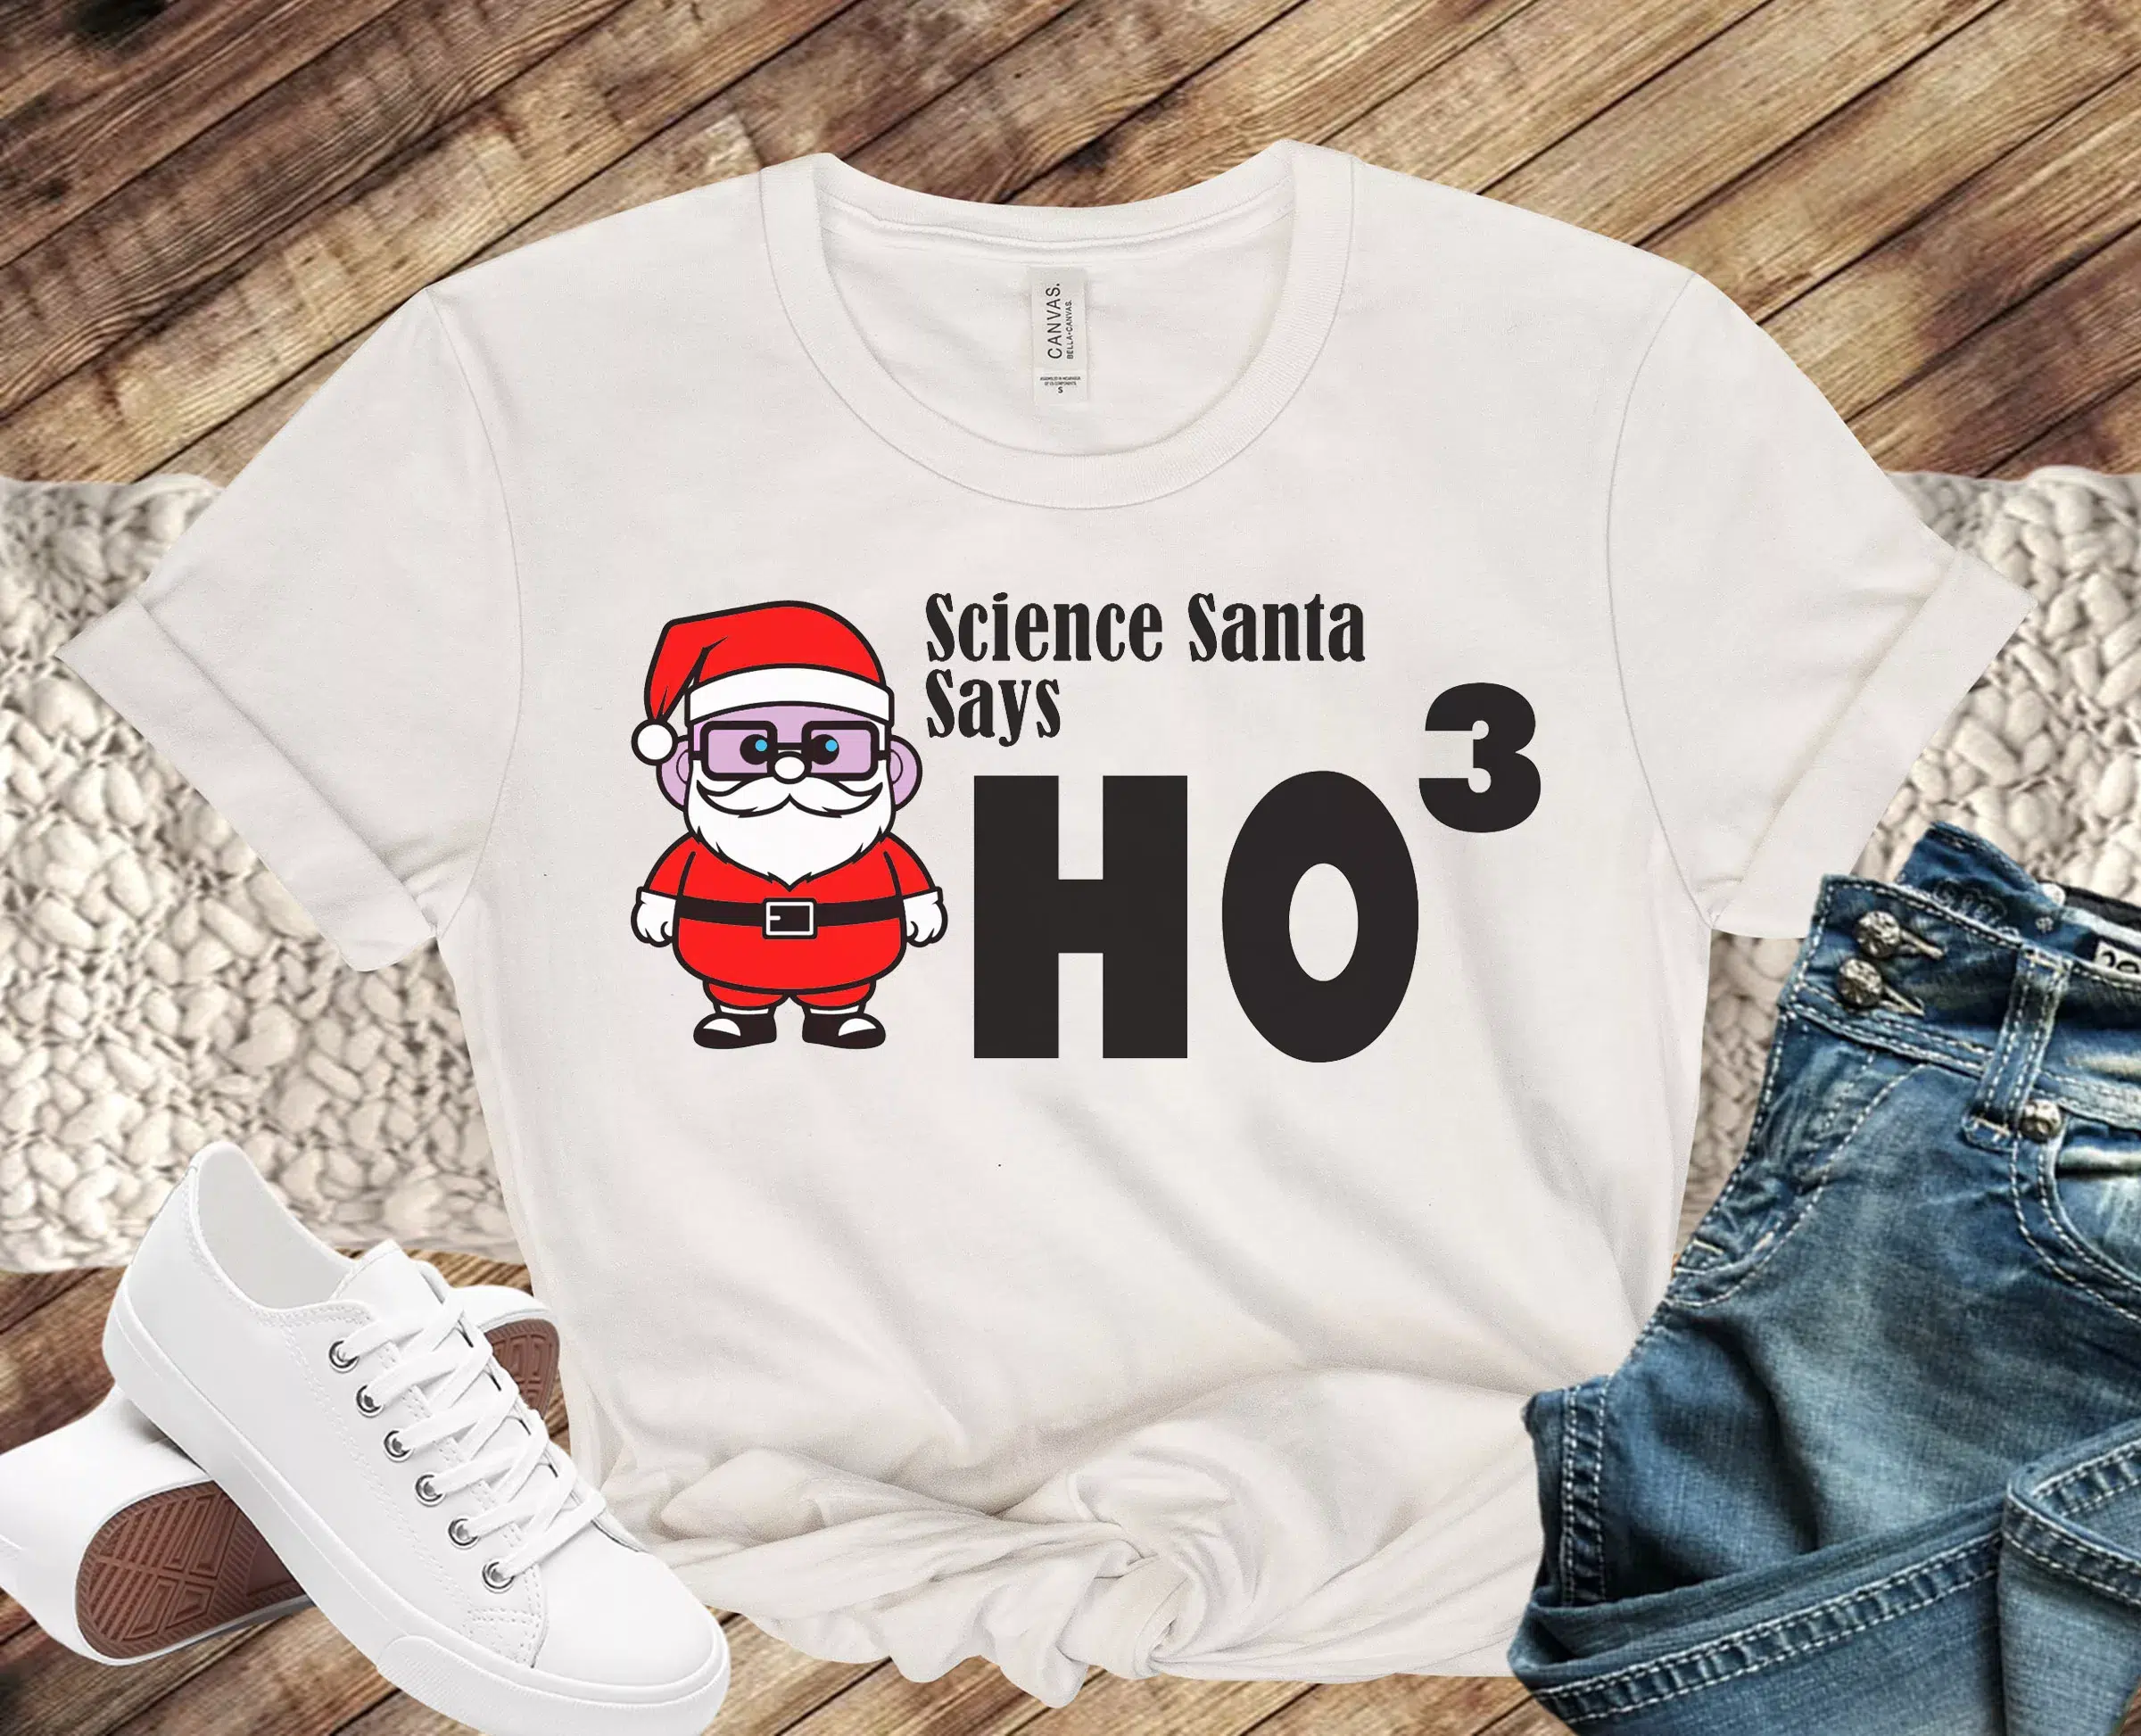 Free Science Santa Says SVG File